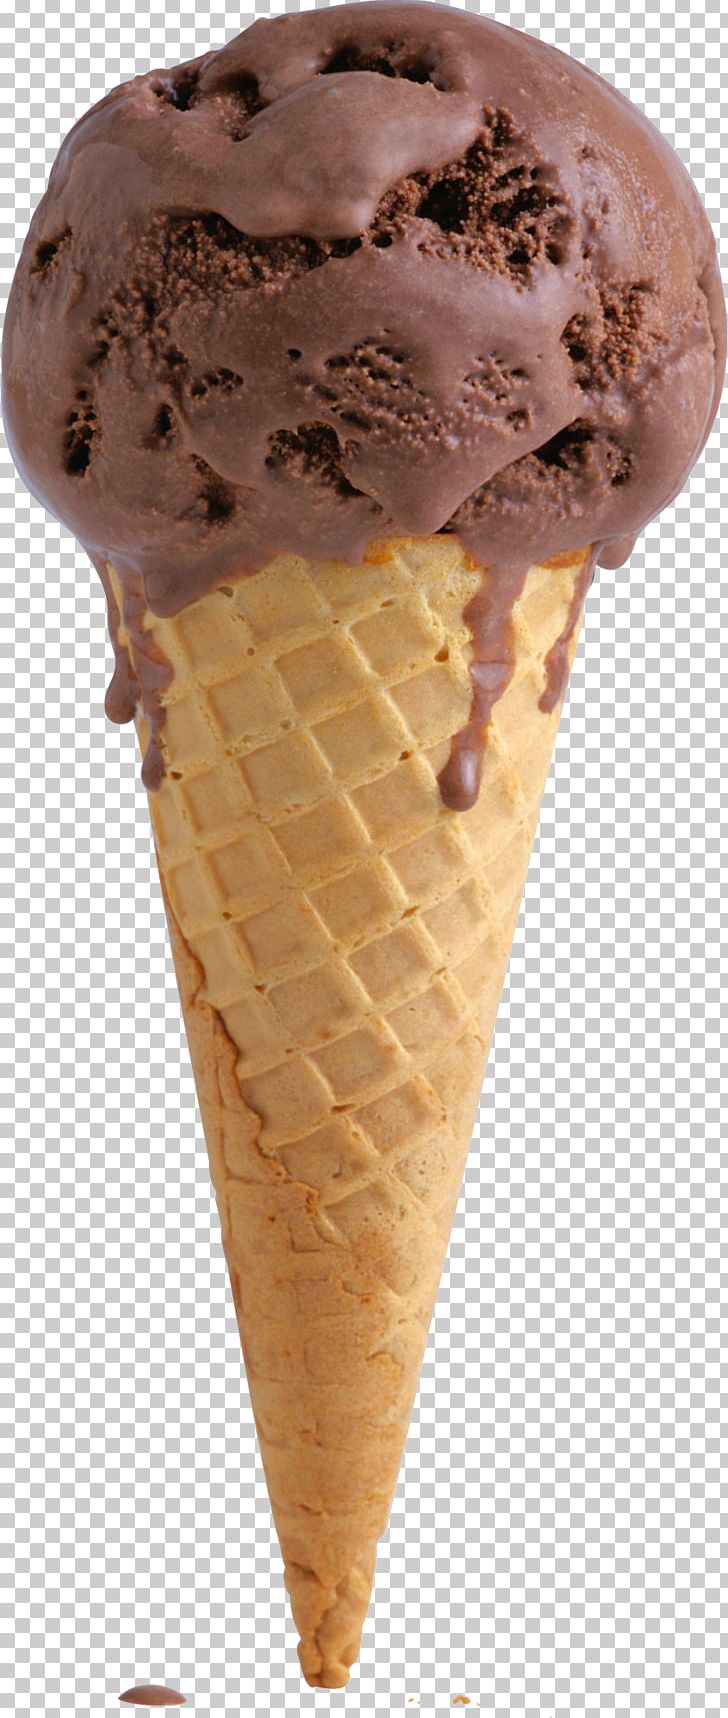 Ice Cream Cones Milkshake Chocolate Truffle Chocolate Ice Cream PNG, Clipart, Chocolate, Chocolate Ice Cream, Chocolate Truffle, Cream, Dairy Product Free PNG Download